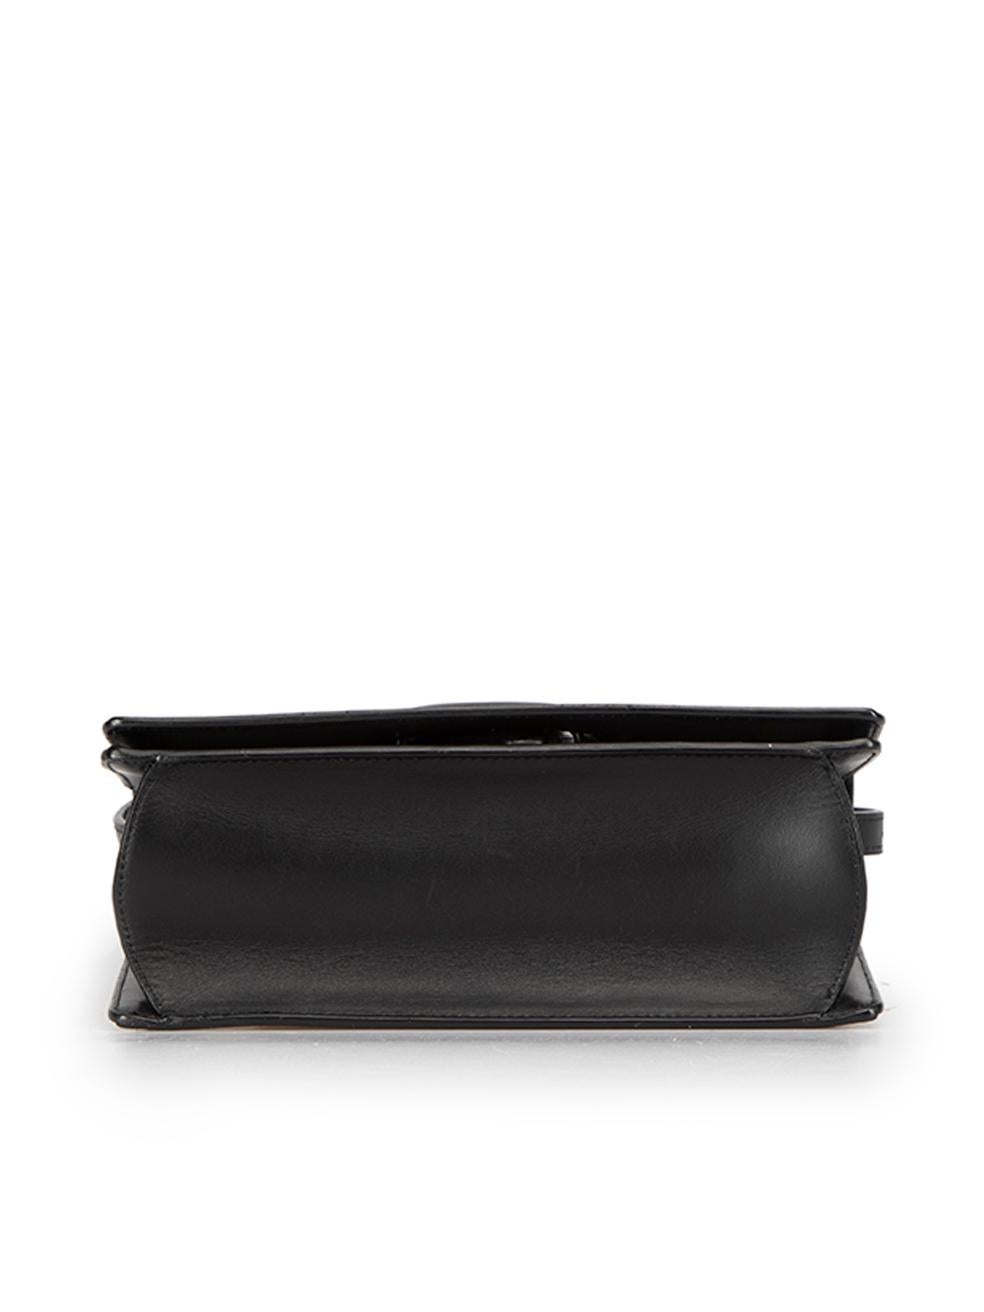 Loewe Women's Black Leather Trim Barcelona Medium Shoulder Bag 1